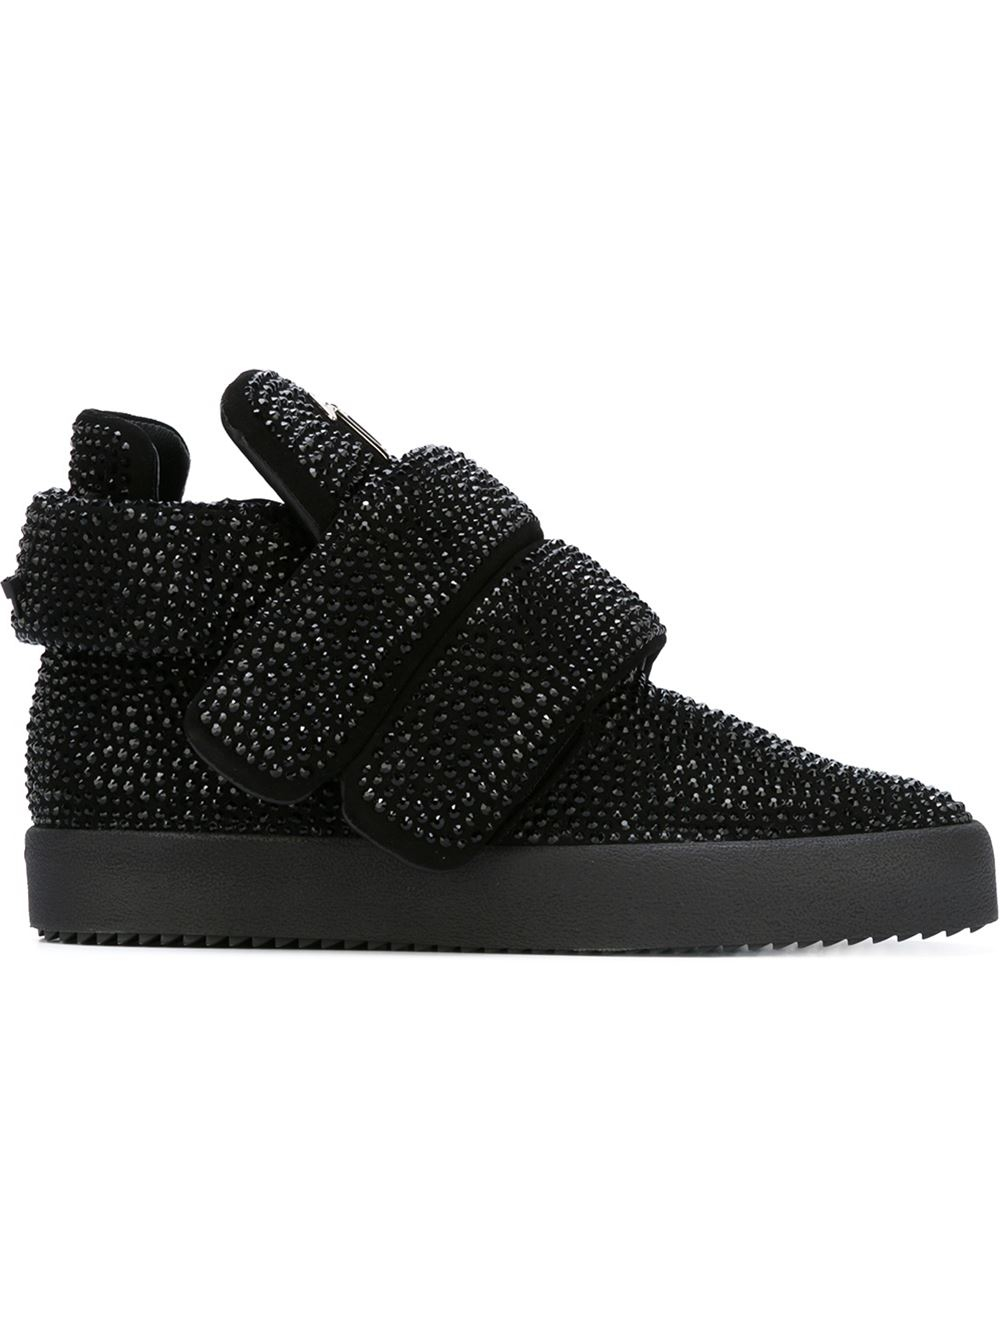 Lyst - Giuseppe Zanotti Velcro-Strap Suede High-Top Sneakers in Black ...